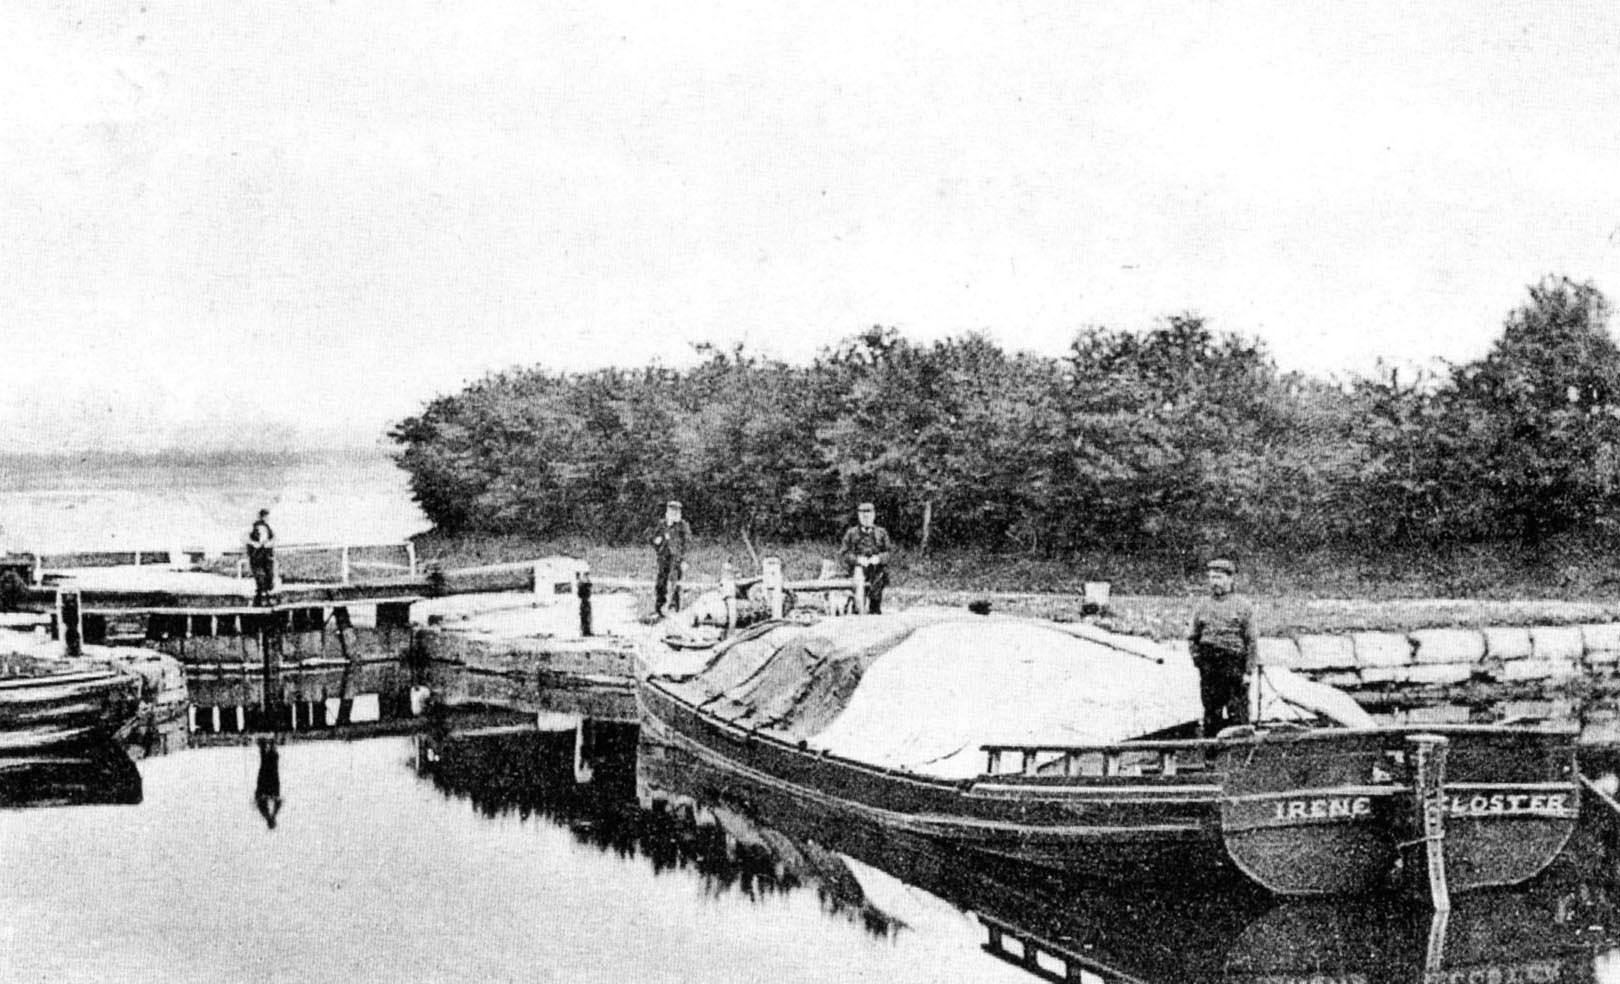 Barge Irene in Framilode Basin.